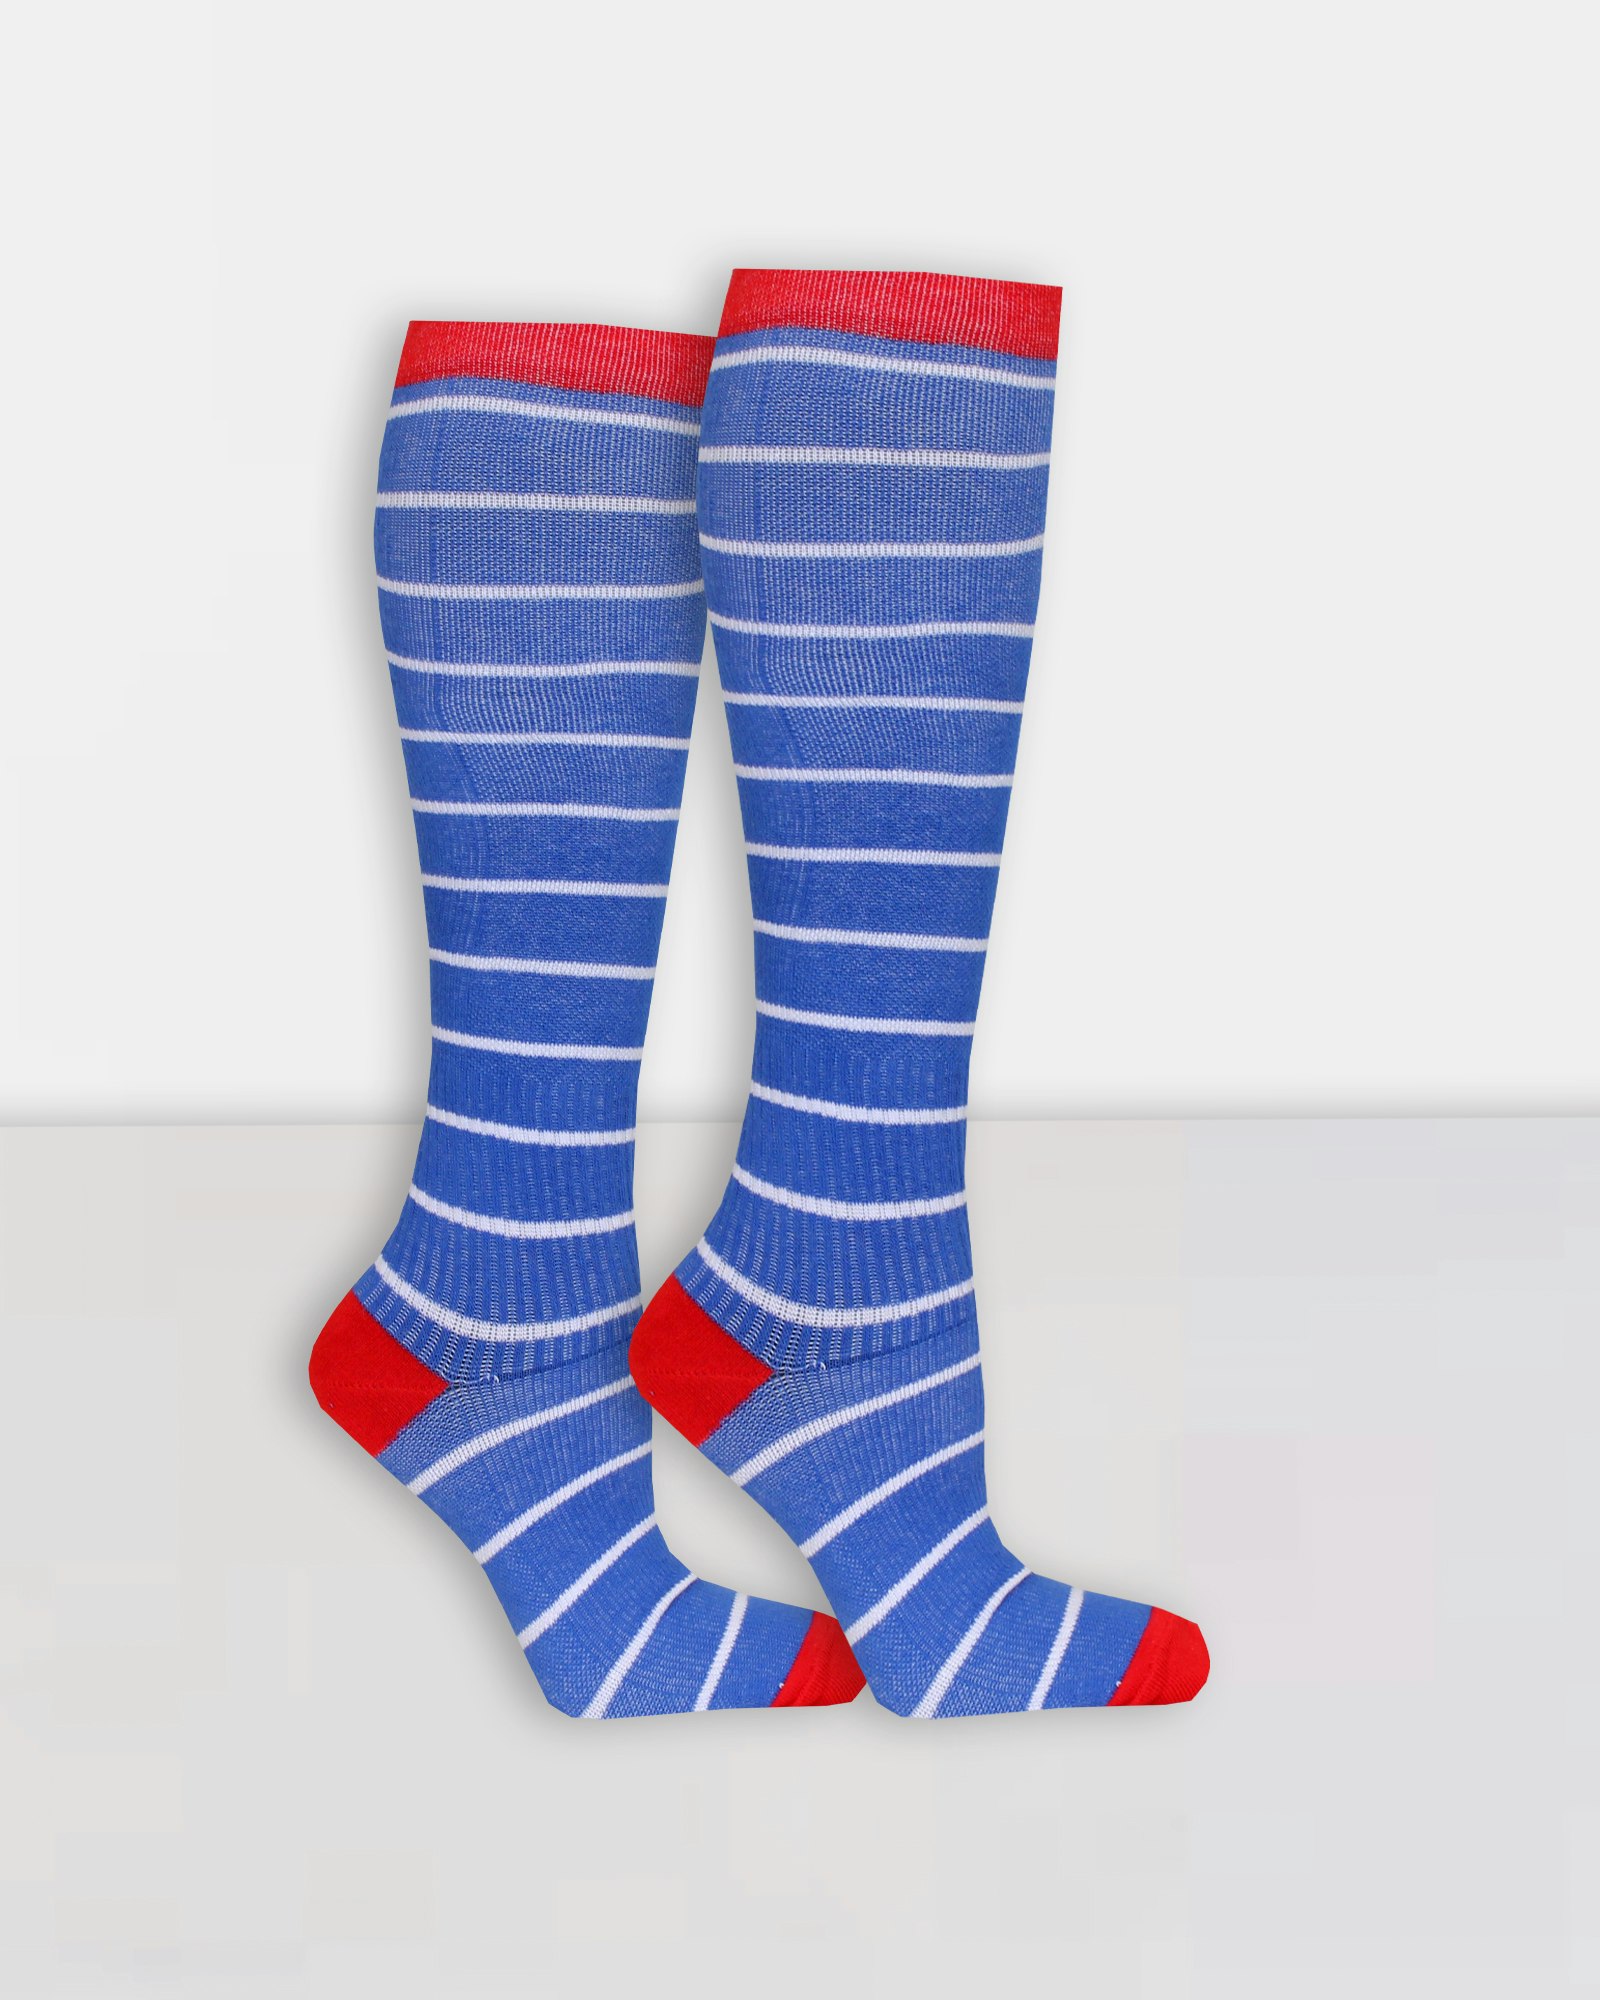 Stödstrumpa Stripes w Red accent, Blue & White, 1-par - Haika Adventure AB